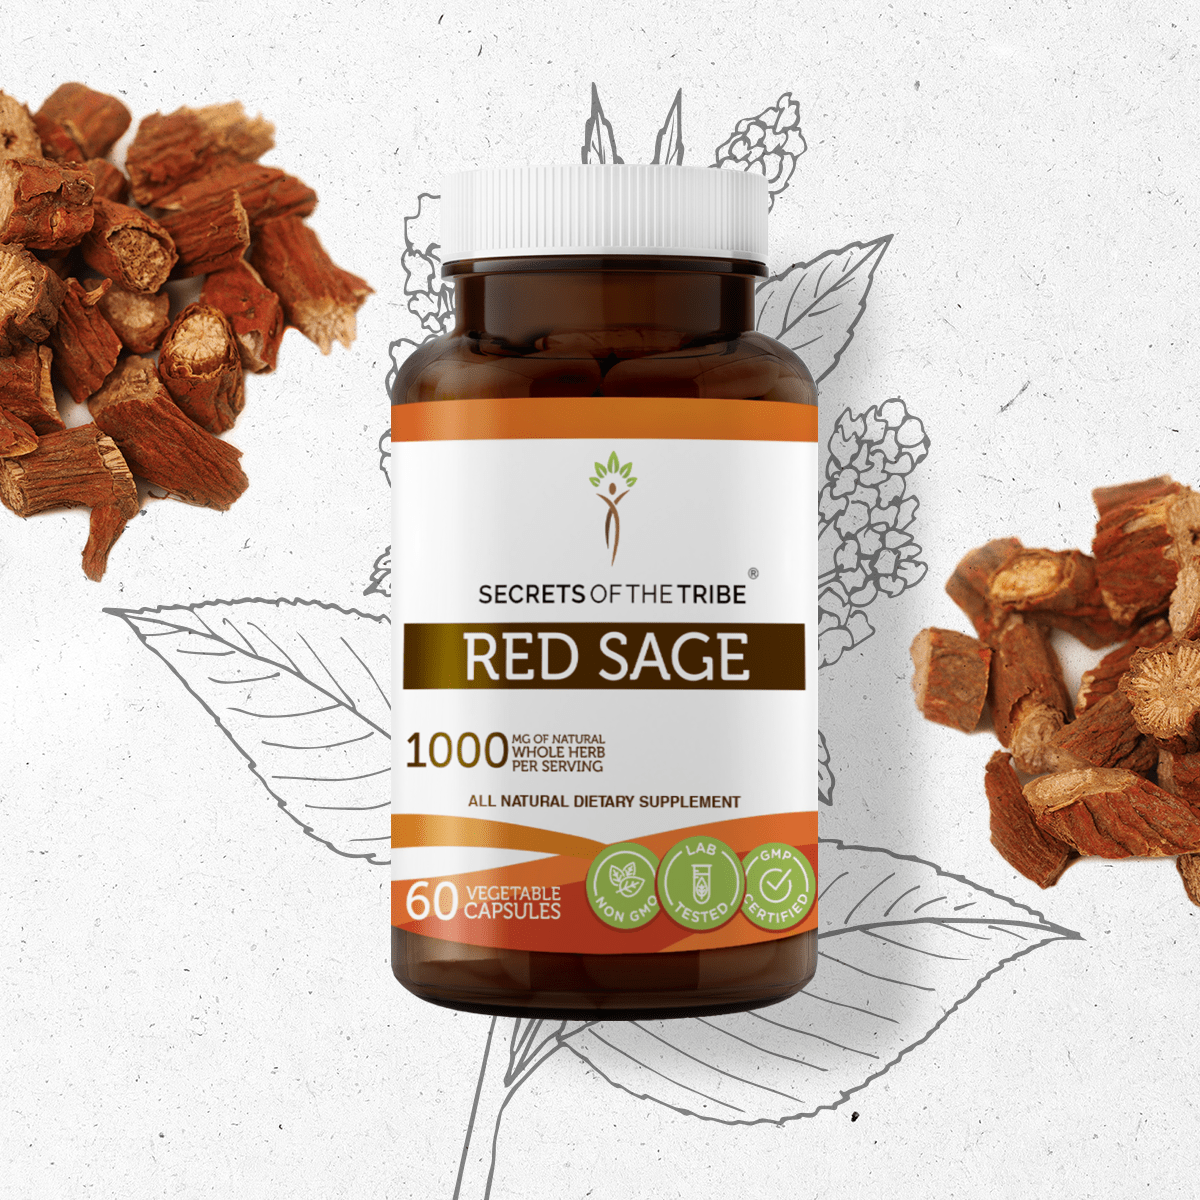 Red Sage Capsules|60&120 Capsules|Certified|Organic